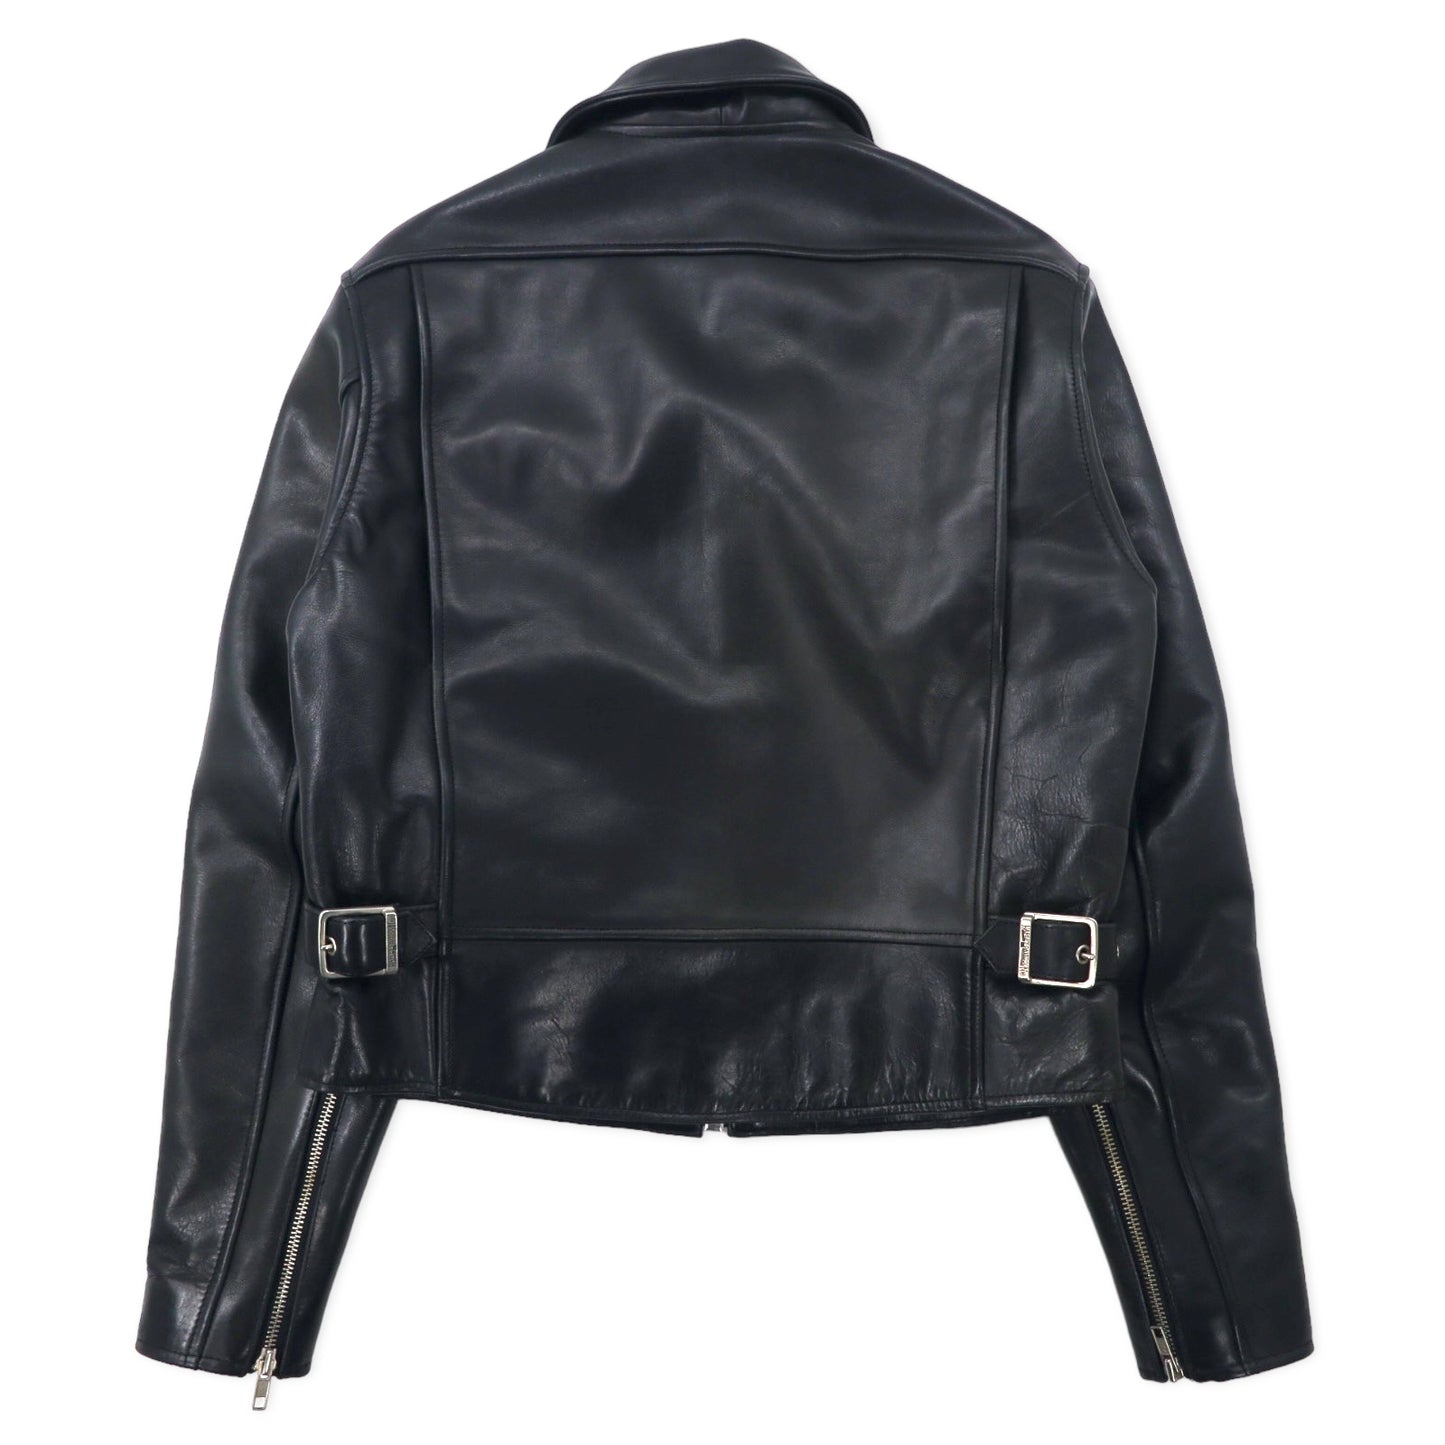 HARLEY DAVIDSON Single Riders Jacket Leather Jacket S Black Cowhide Quilted  Liner 40181